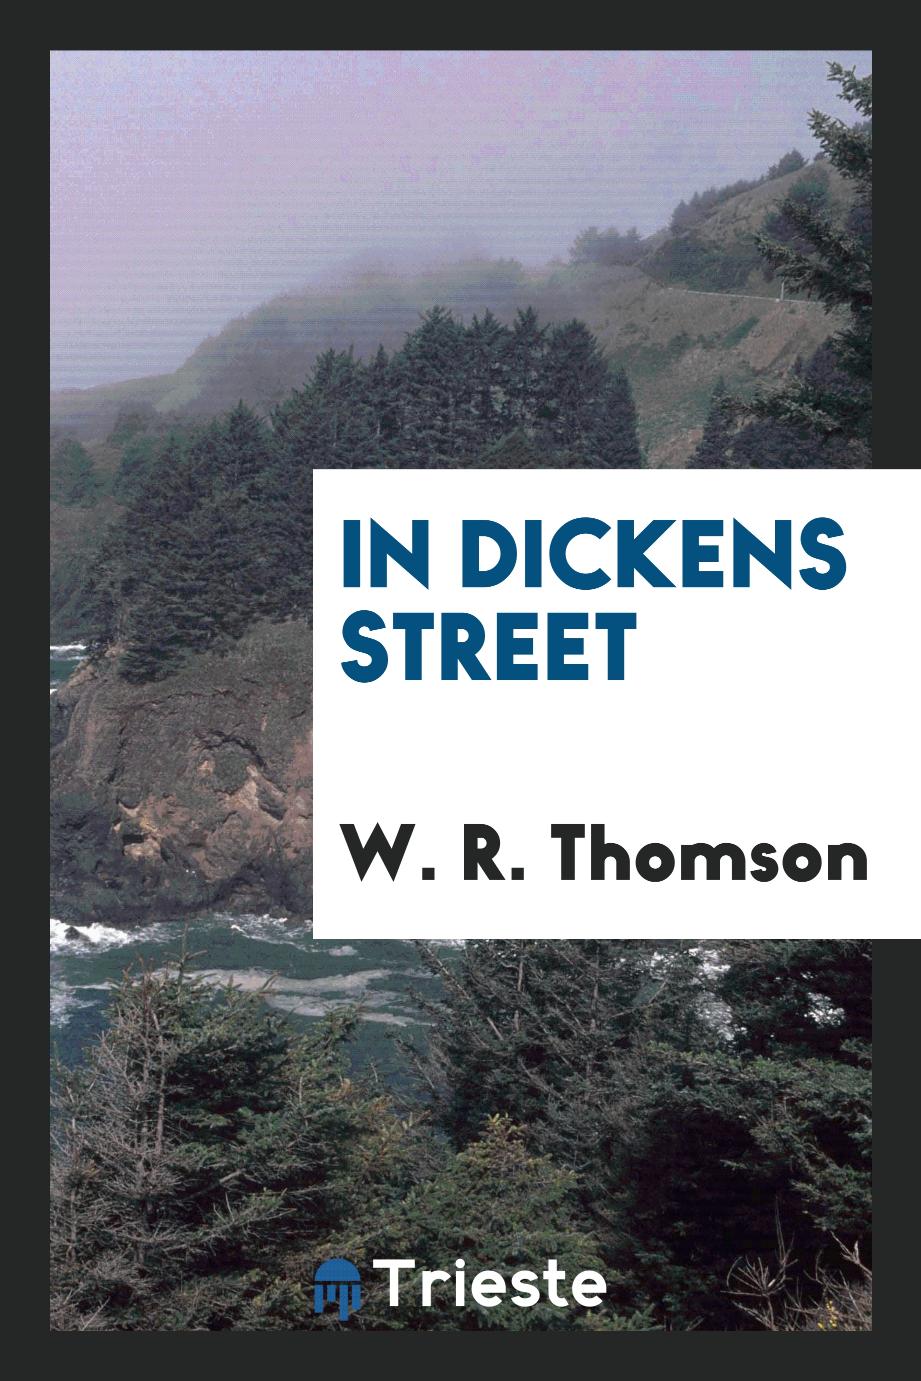 In Dickens street